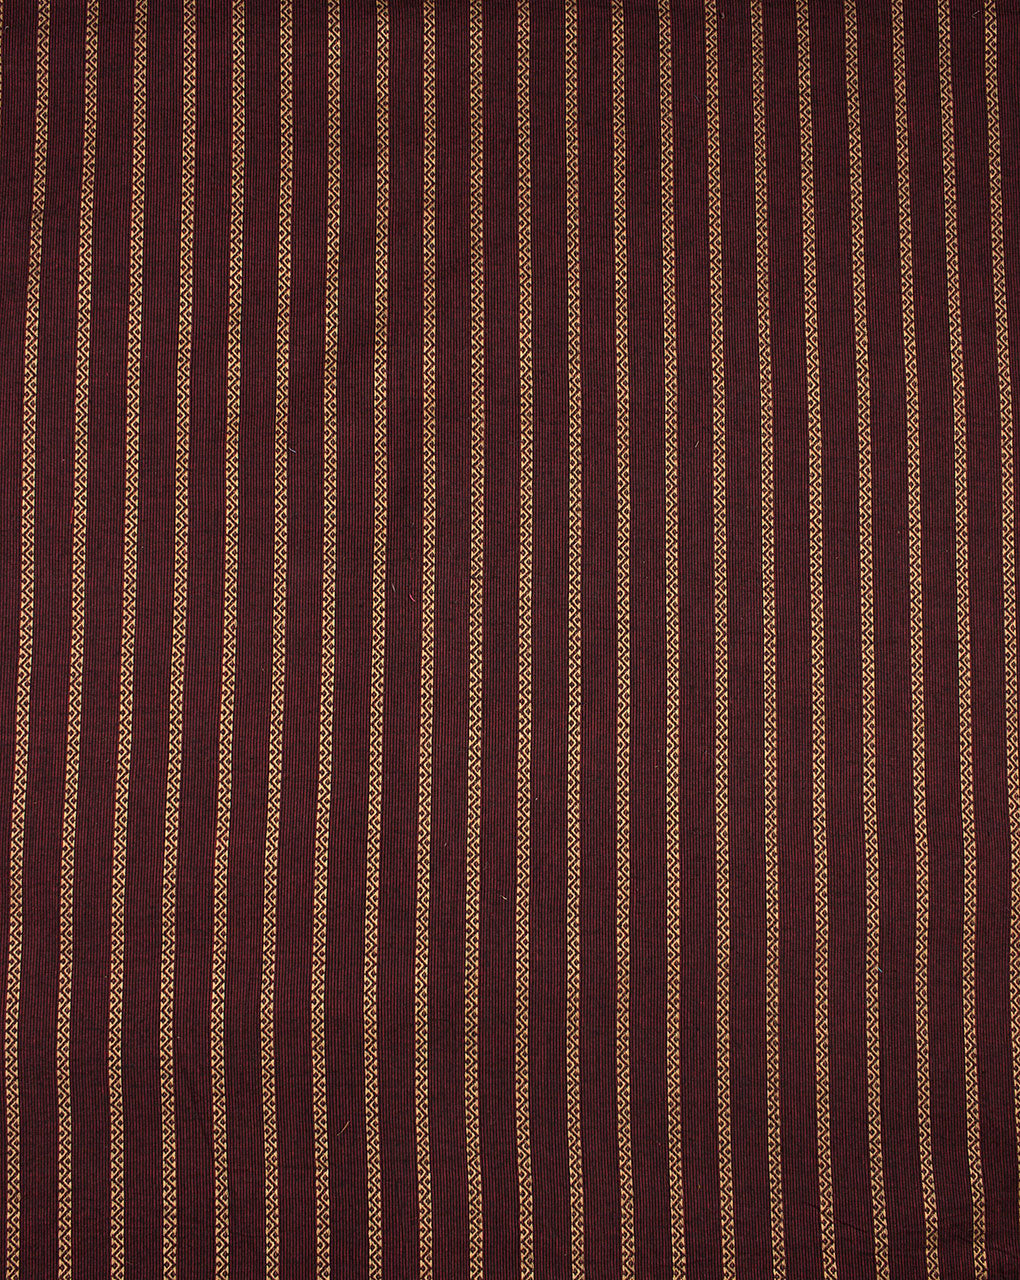 Woven Loom TextuDobby Cotton Fabric - Fabriclore.com